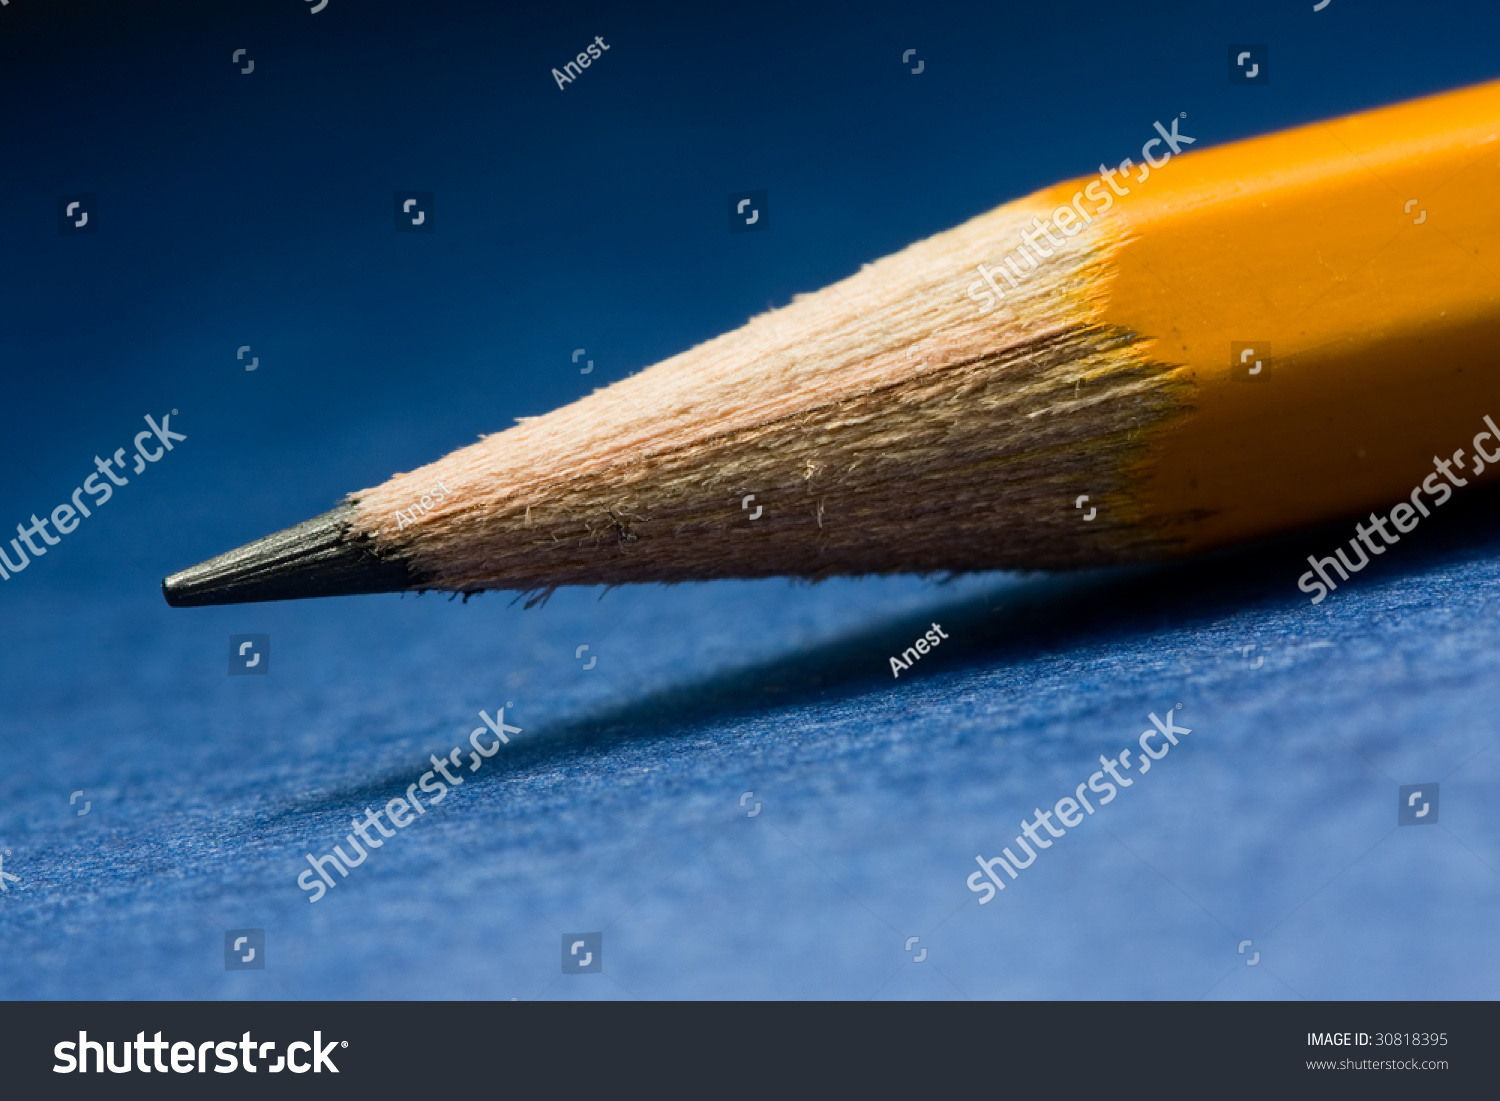 Macro of sharpened lead pencil #30818395